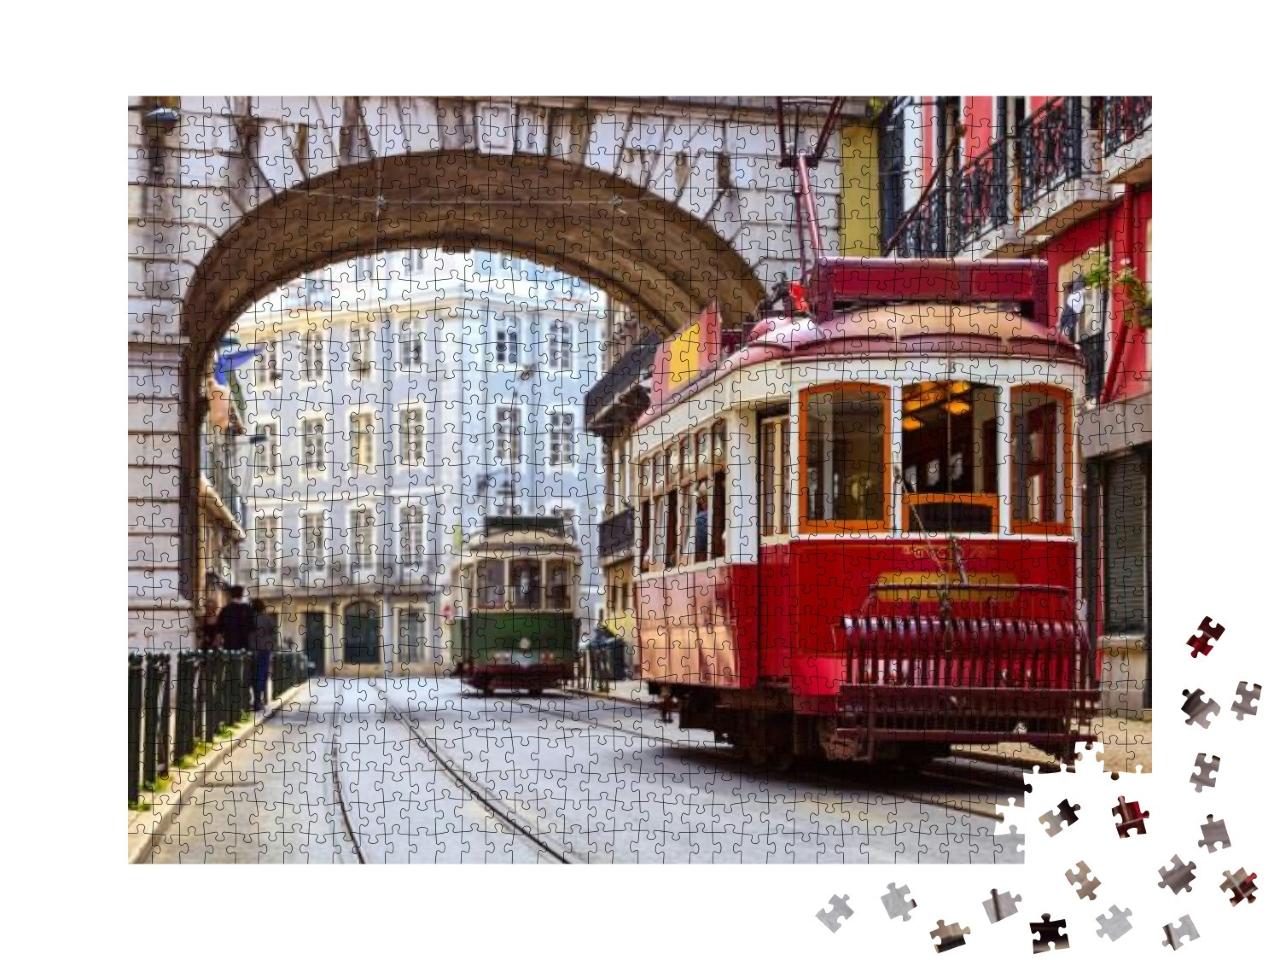 Puzzle 1000 Teile „Lissabon, Portugal: Rote Retro-Straßenbahn im Alfama-Viertel“